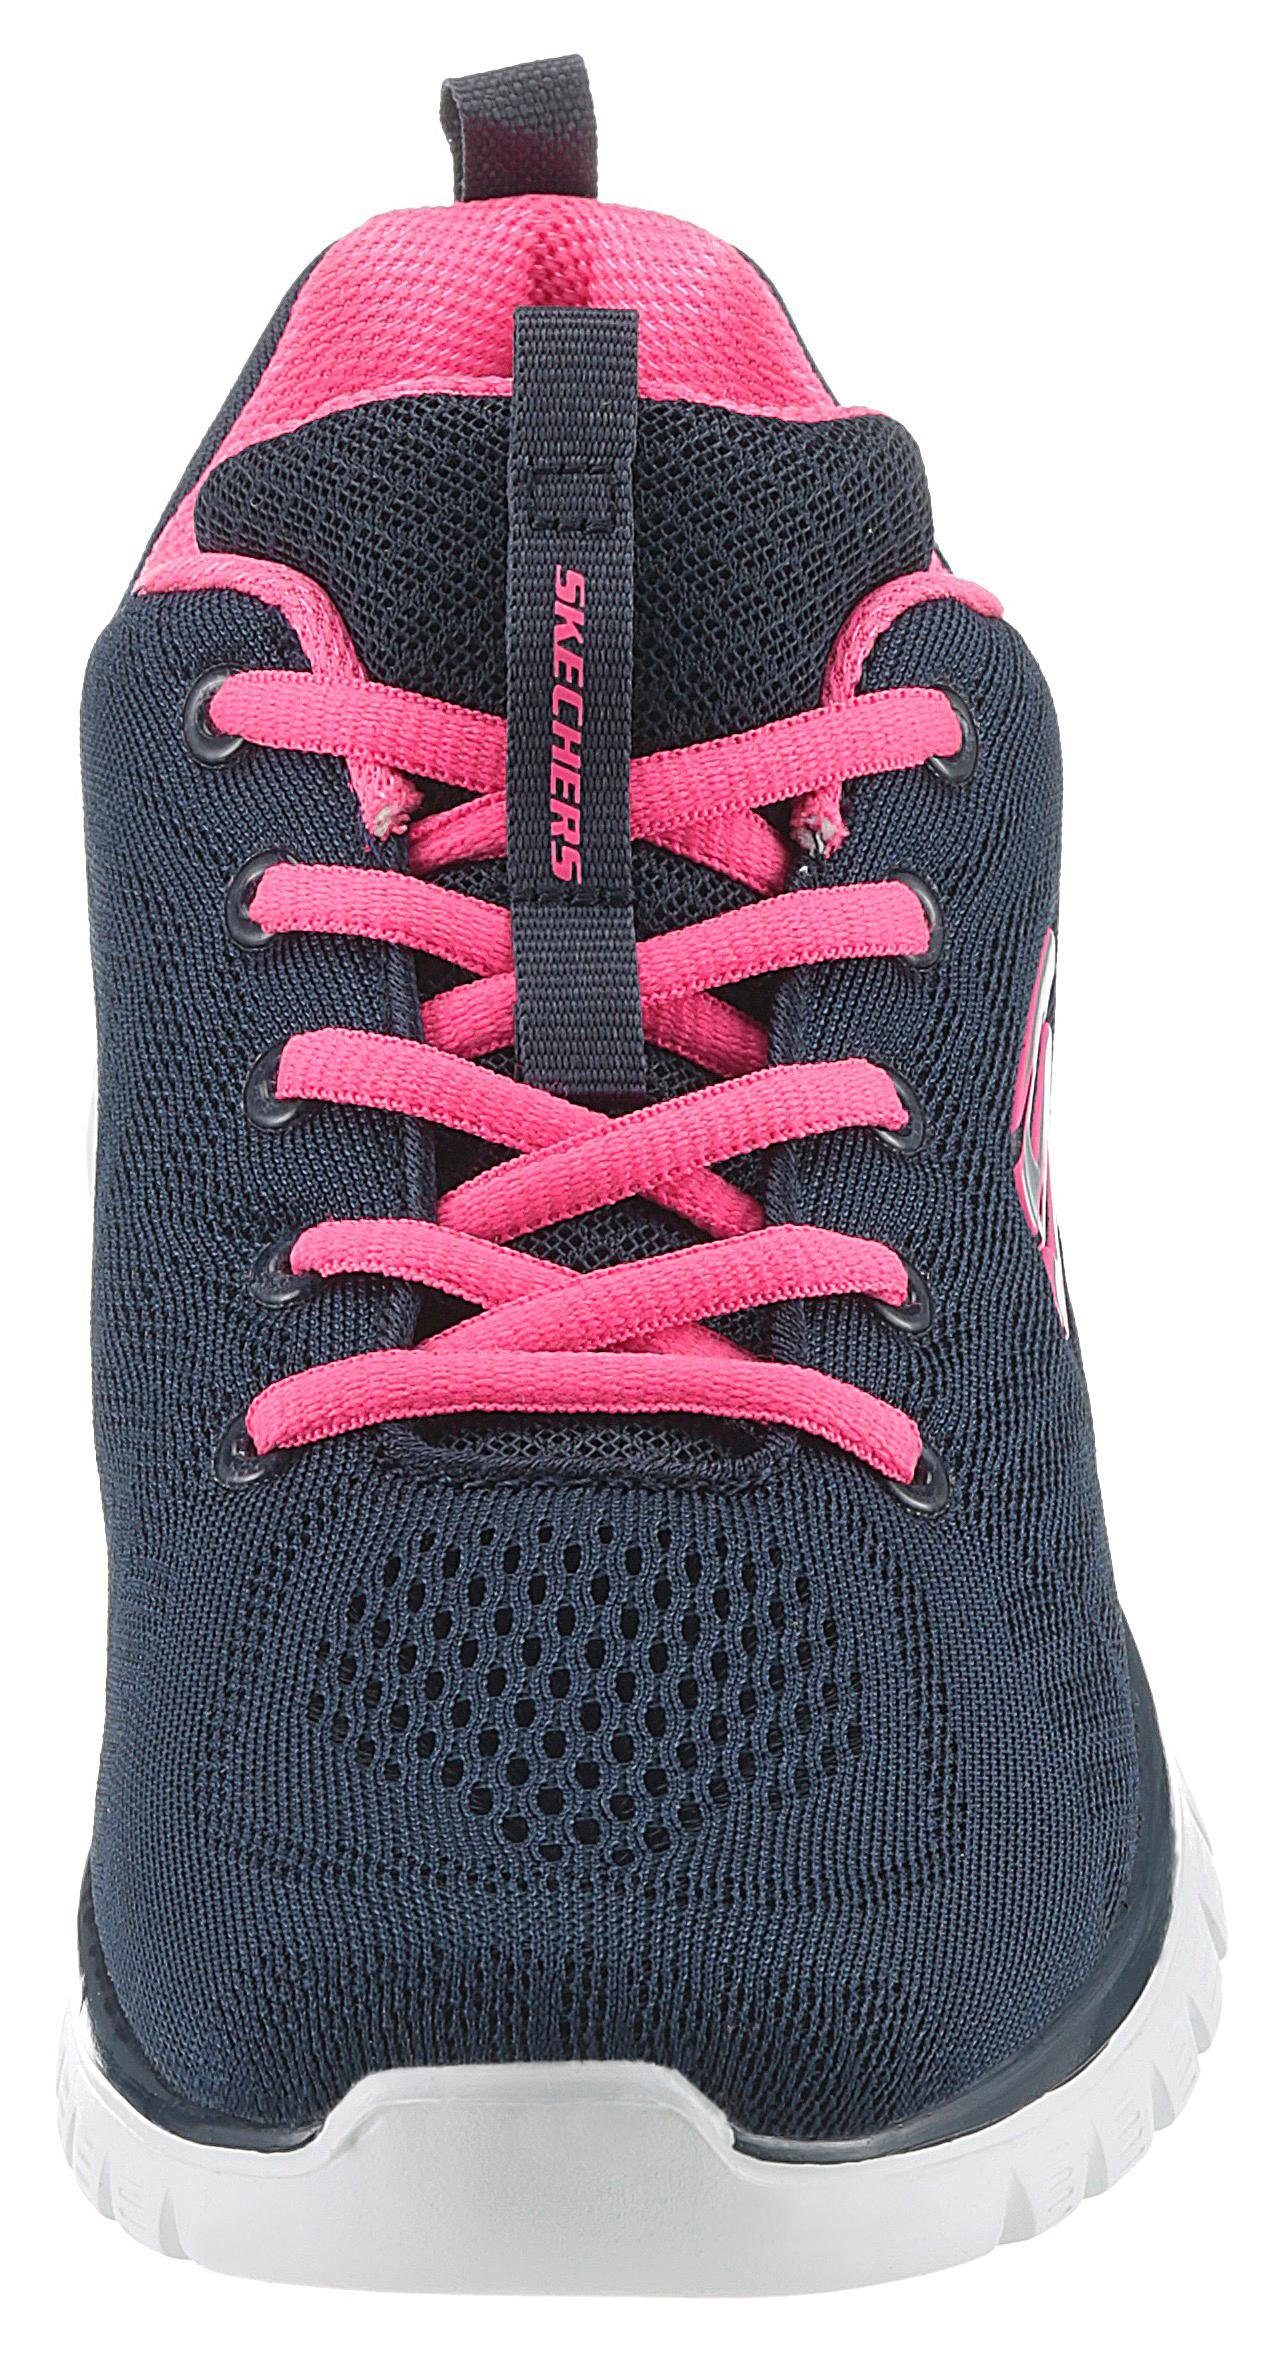 Skechers Graceful - durch navy-pink Sneaker Get Memory Foam Connected mit Dämpfung